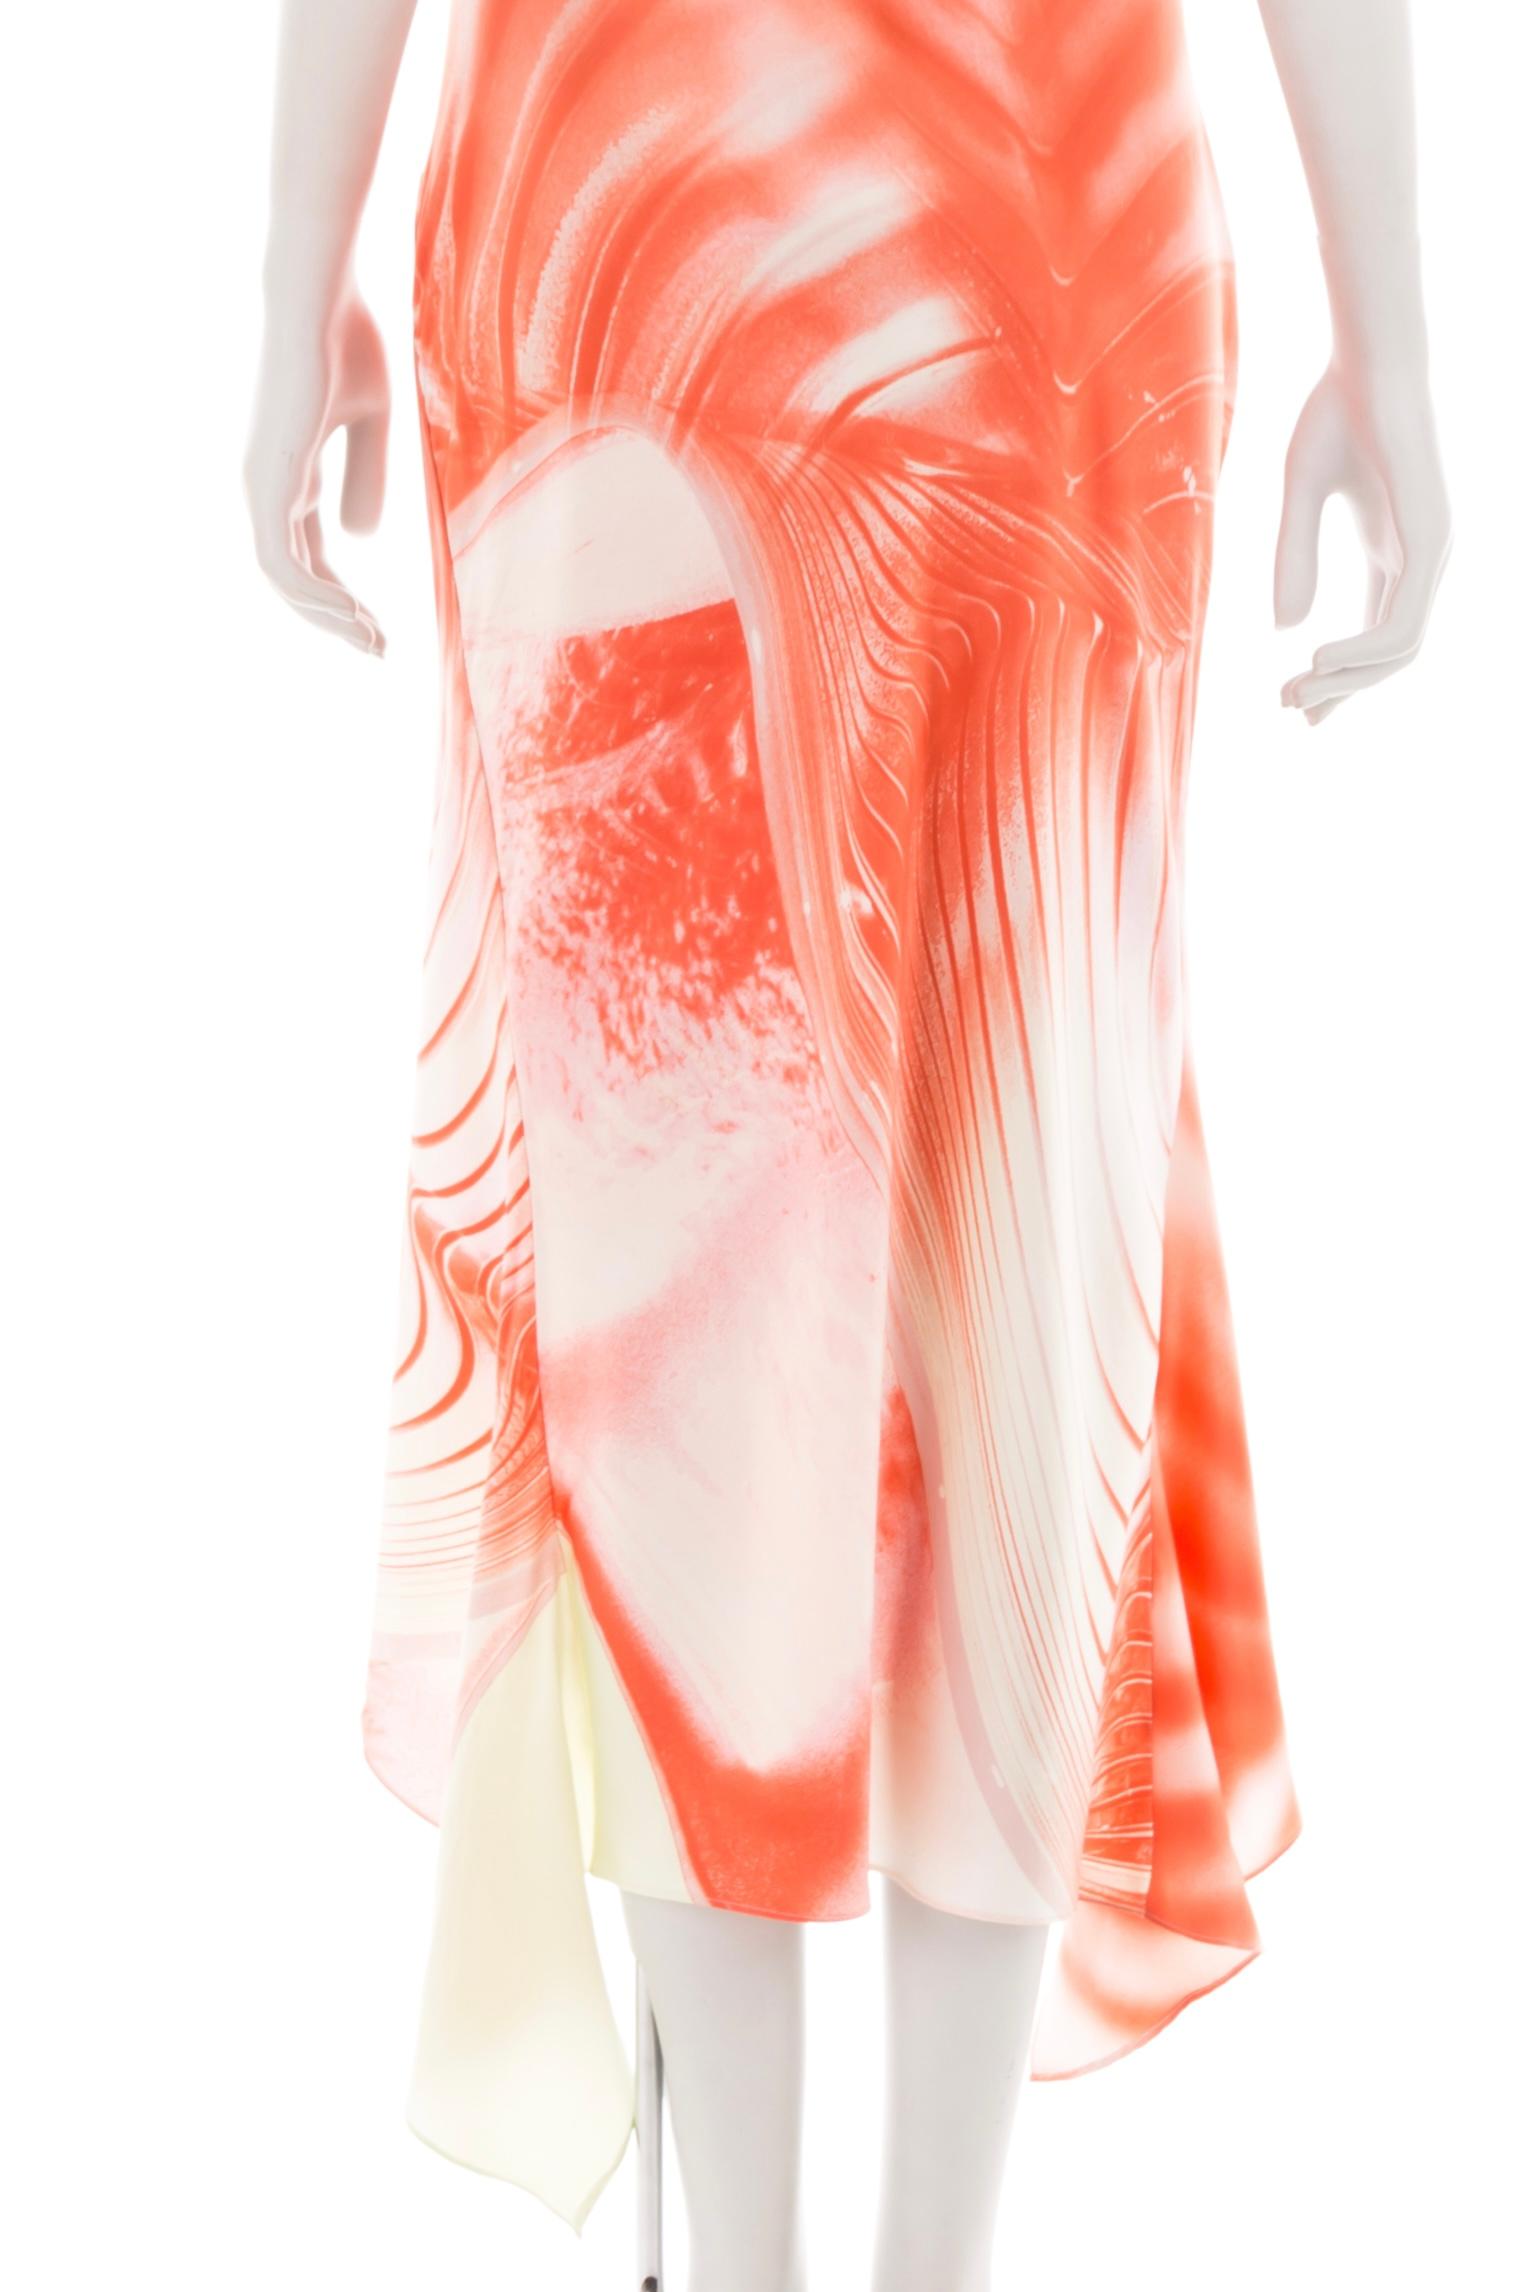 Roberto Cavalli S/S 2001 coral open-back graphic silk dress For Sale 4